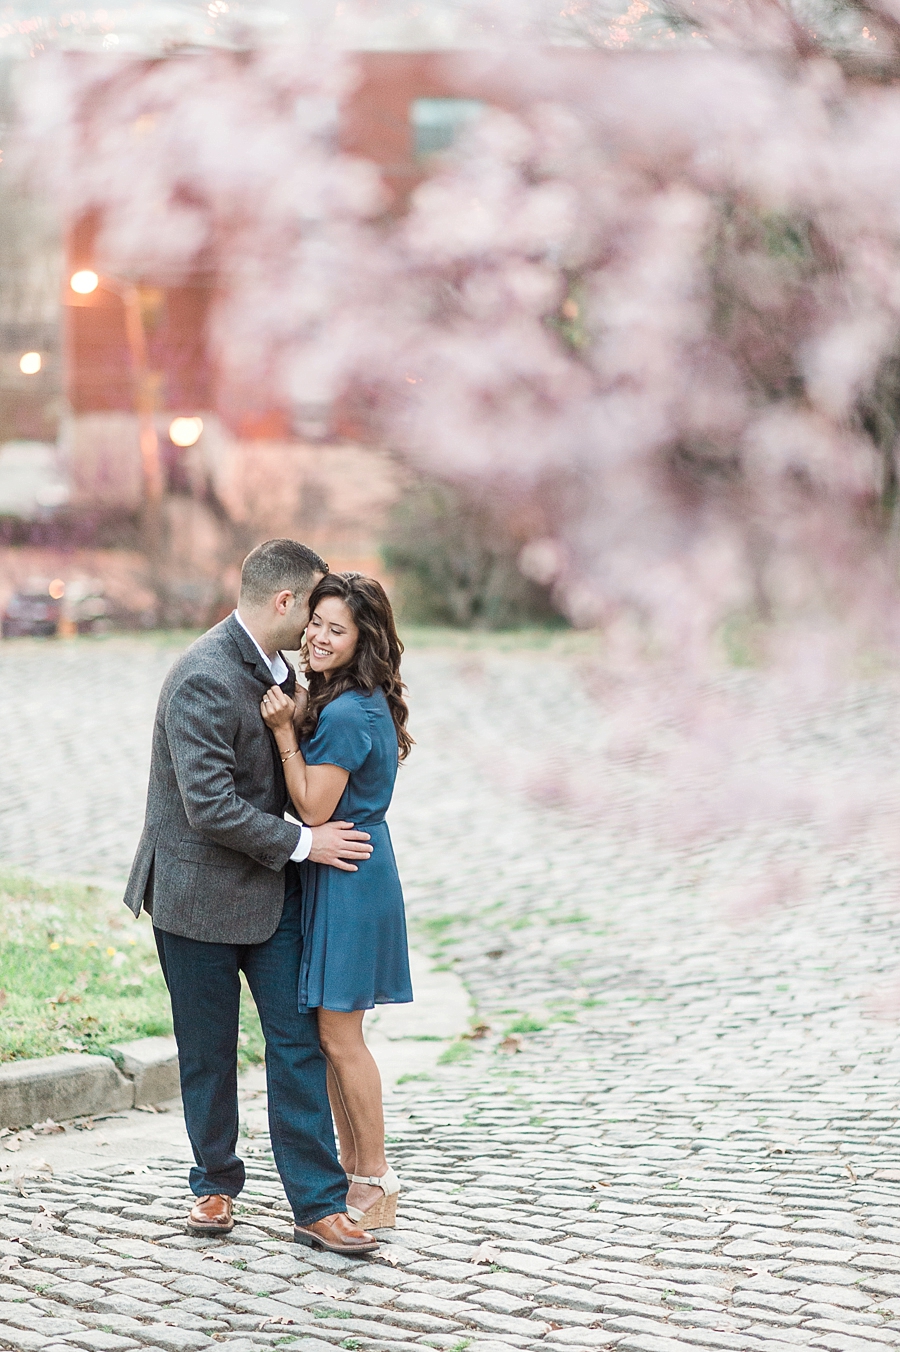 Chris & Natalie | Downtown Richmond, Virginia Engagement Photographer